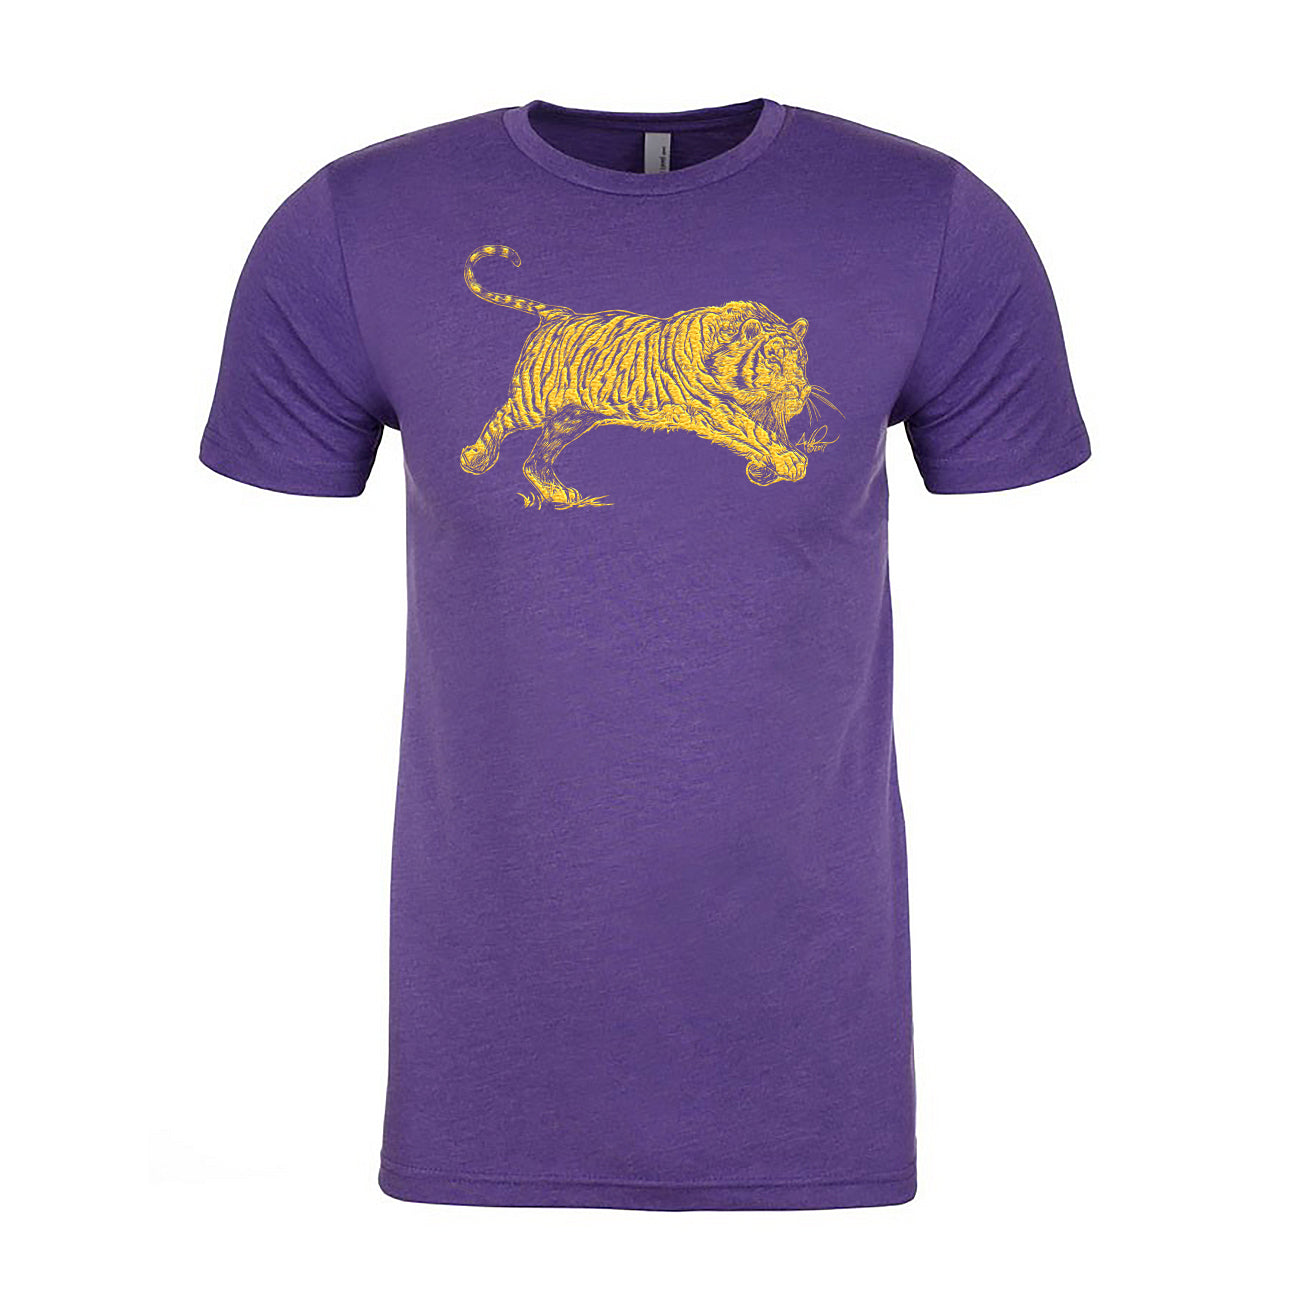 Charging Tiger Men's Shirt, Gold on Purple Rush